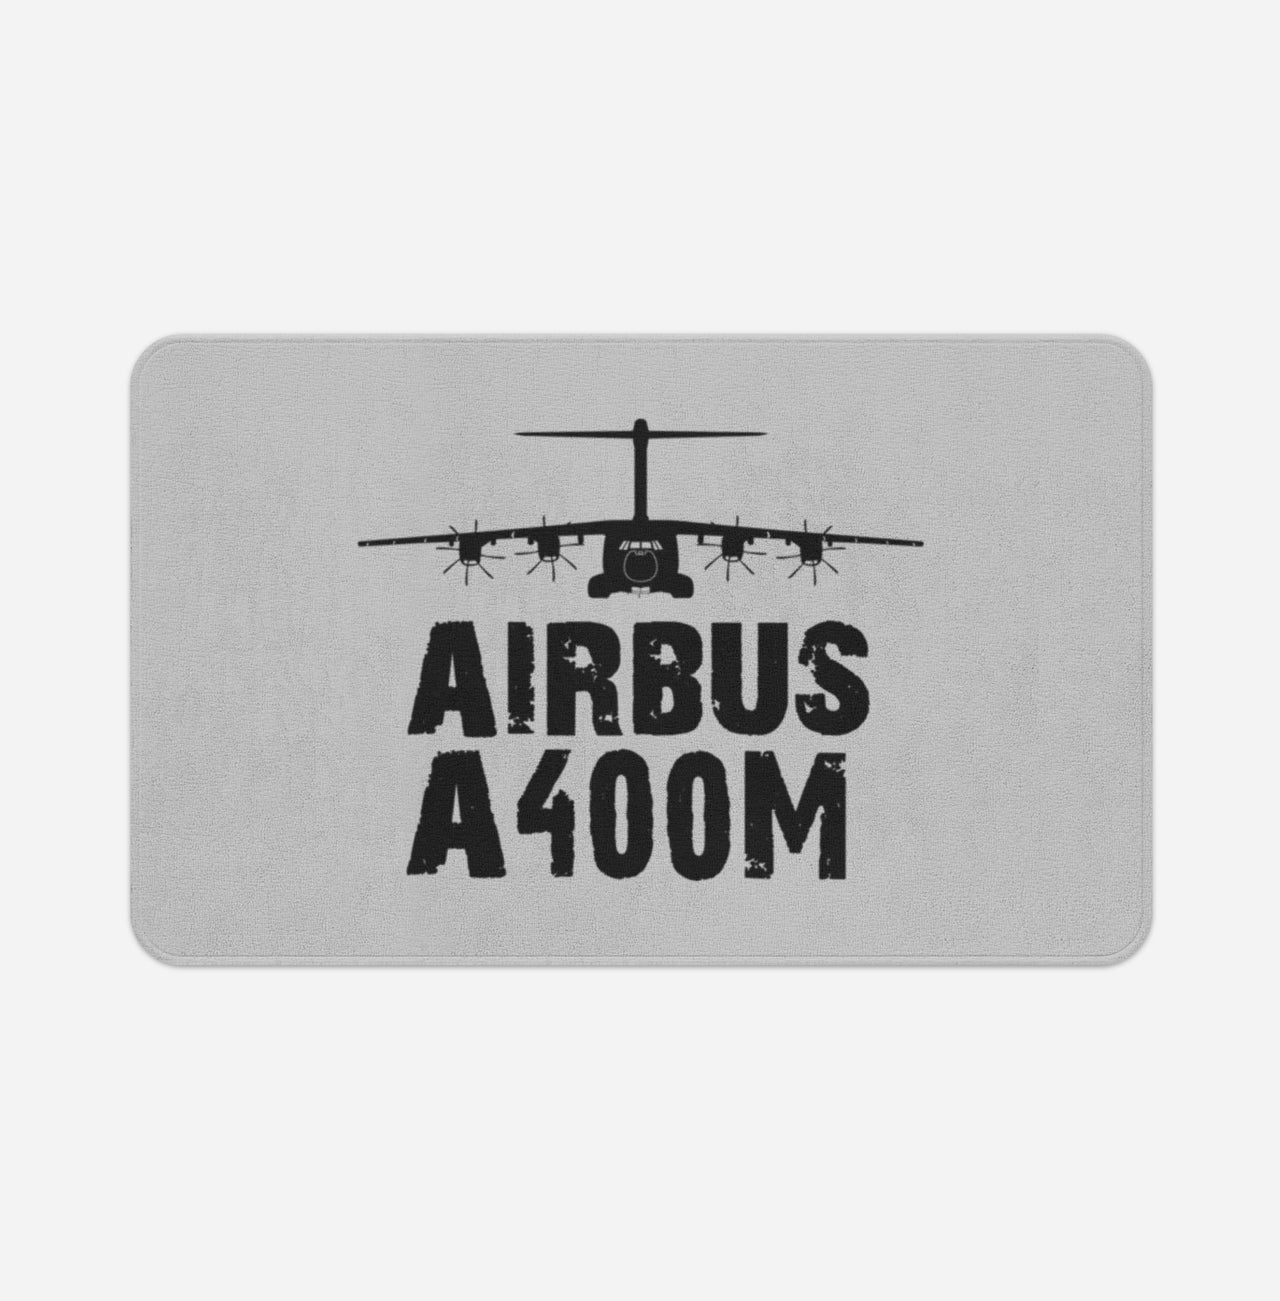 Airbus A400M & Plane Designed Bath Mats